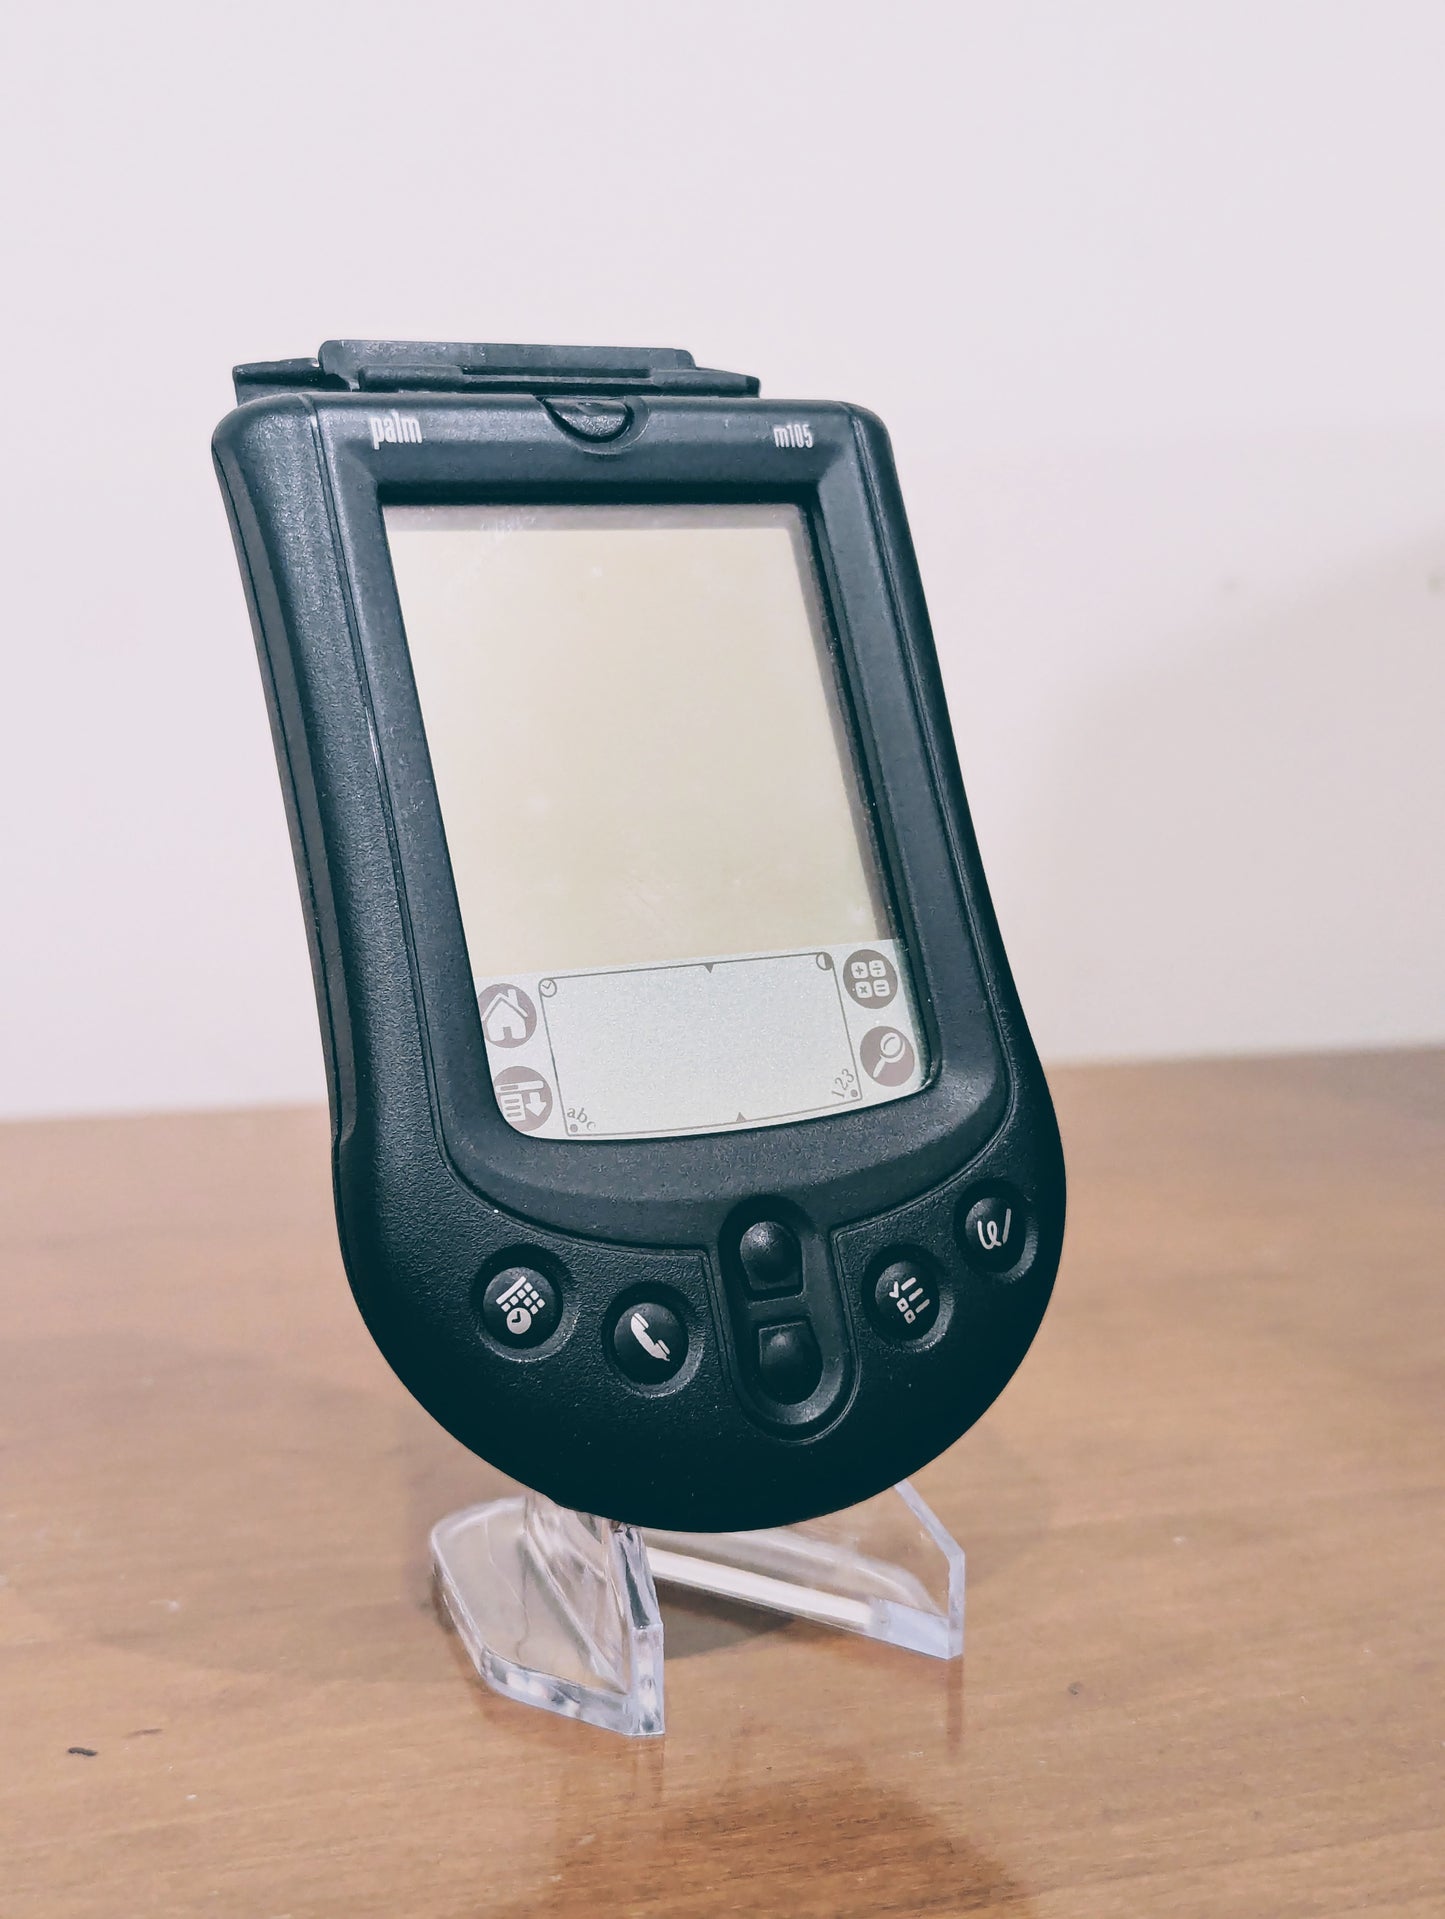 Palm PDA Line (1999-2000)